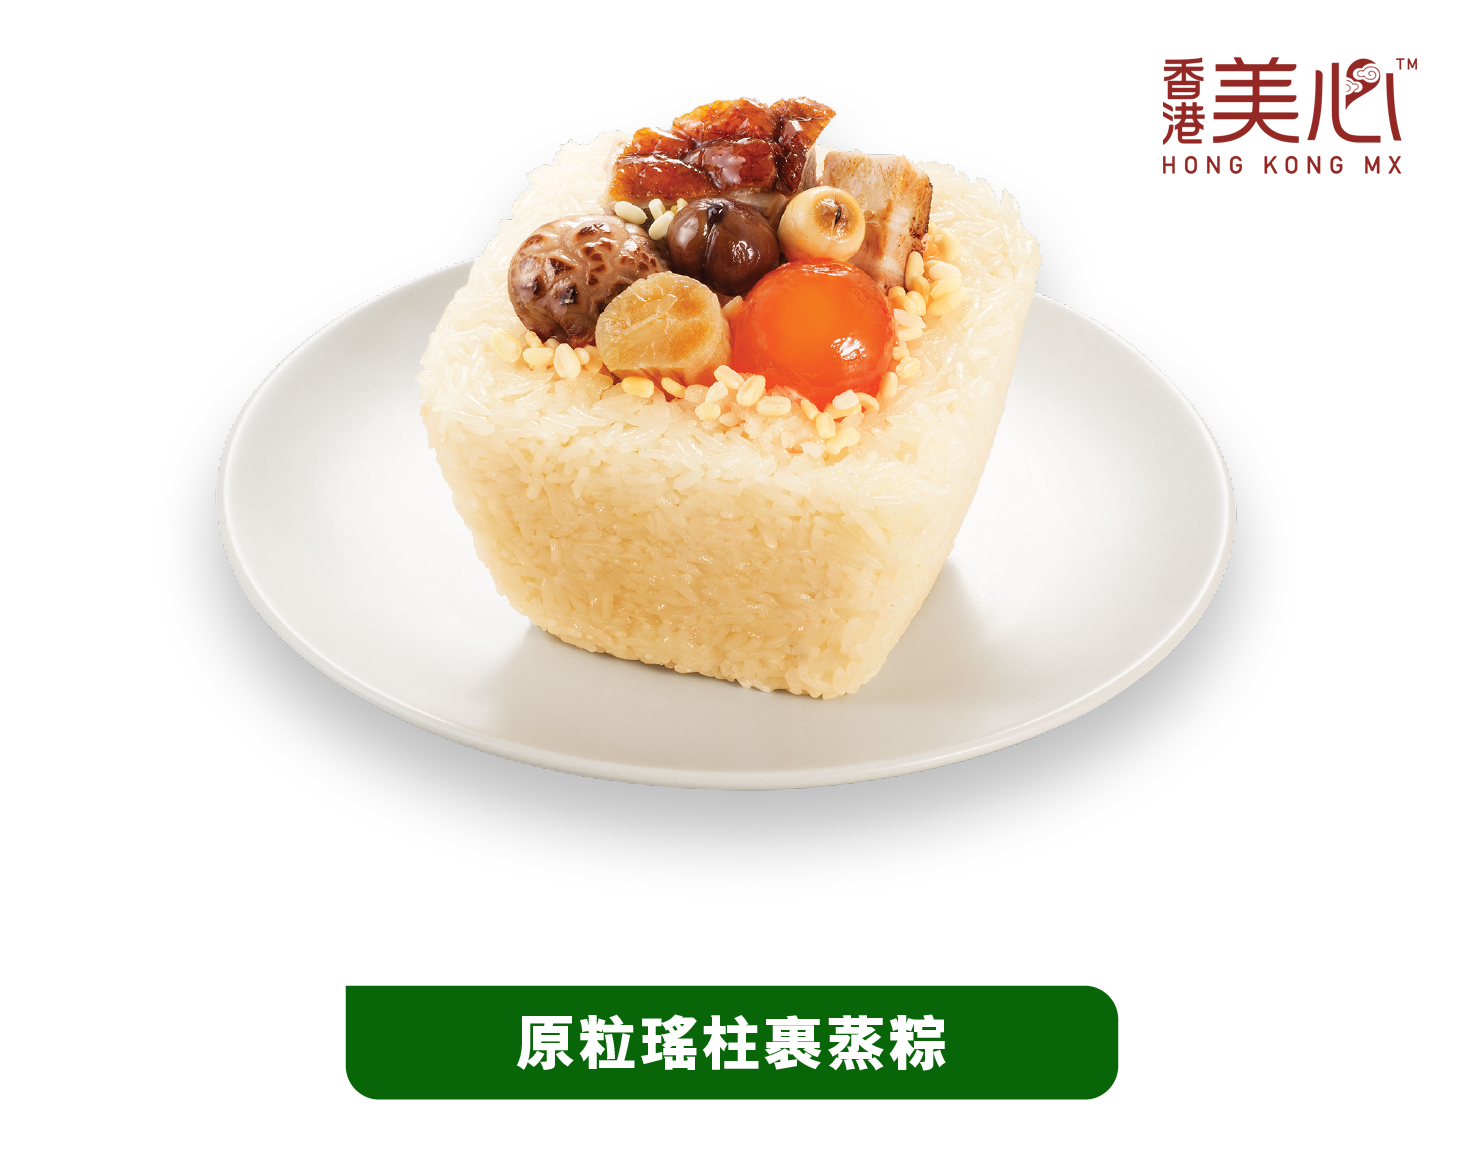 [JLL Offer] Maxim’s | Rice Dumpling with Whole Conpoy e-Voucher